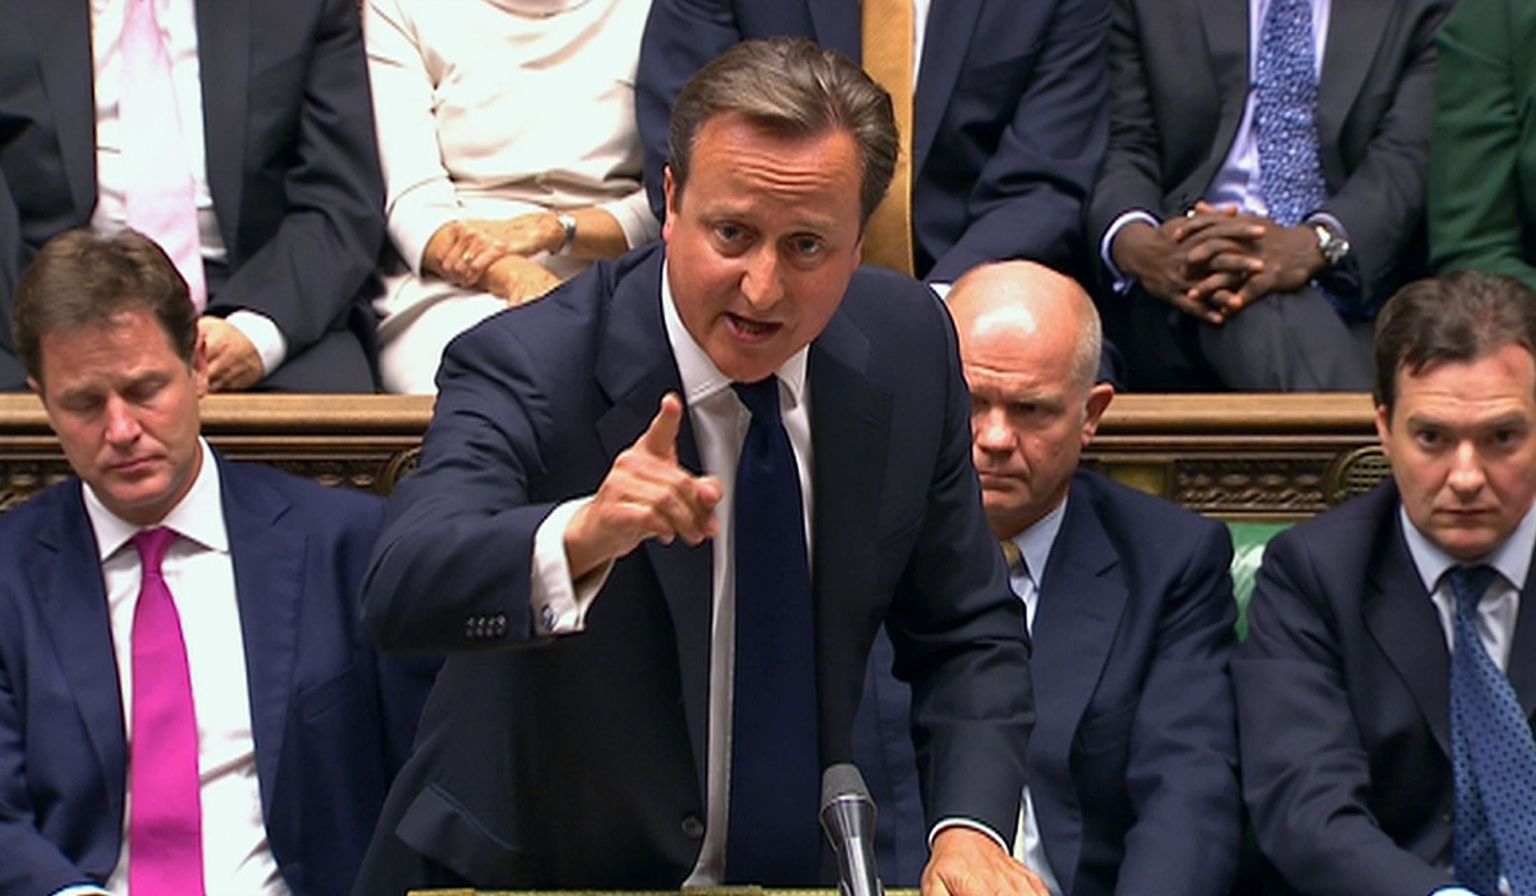 Briti peaminister David Cameron parlamendis kõnelemas.